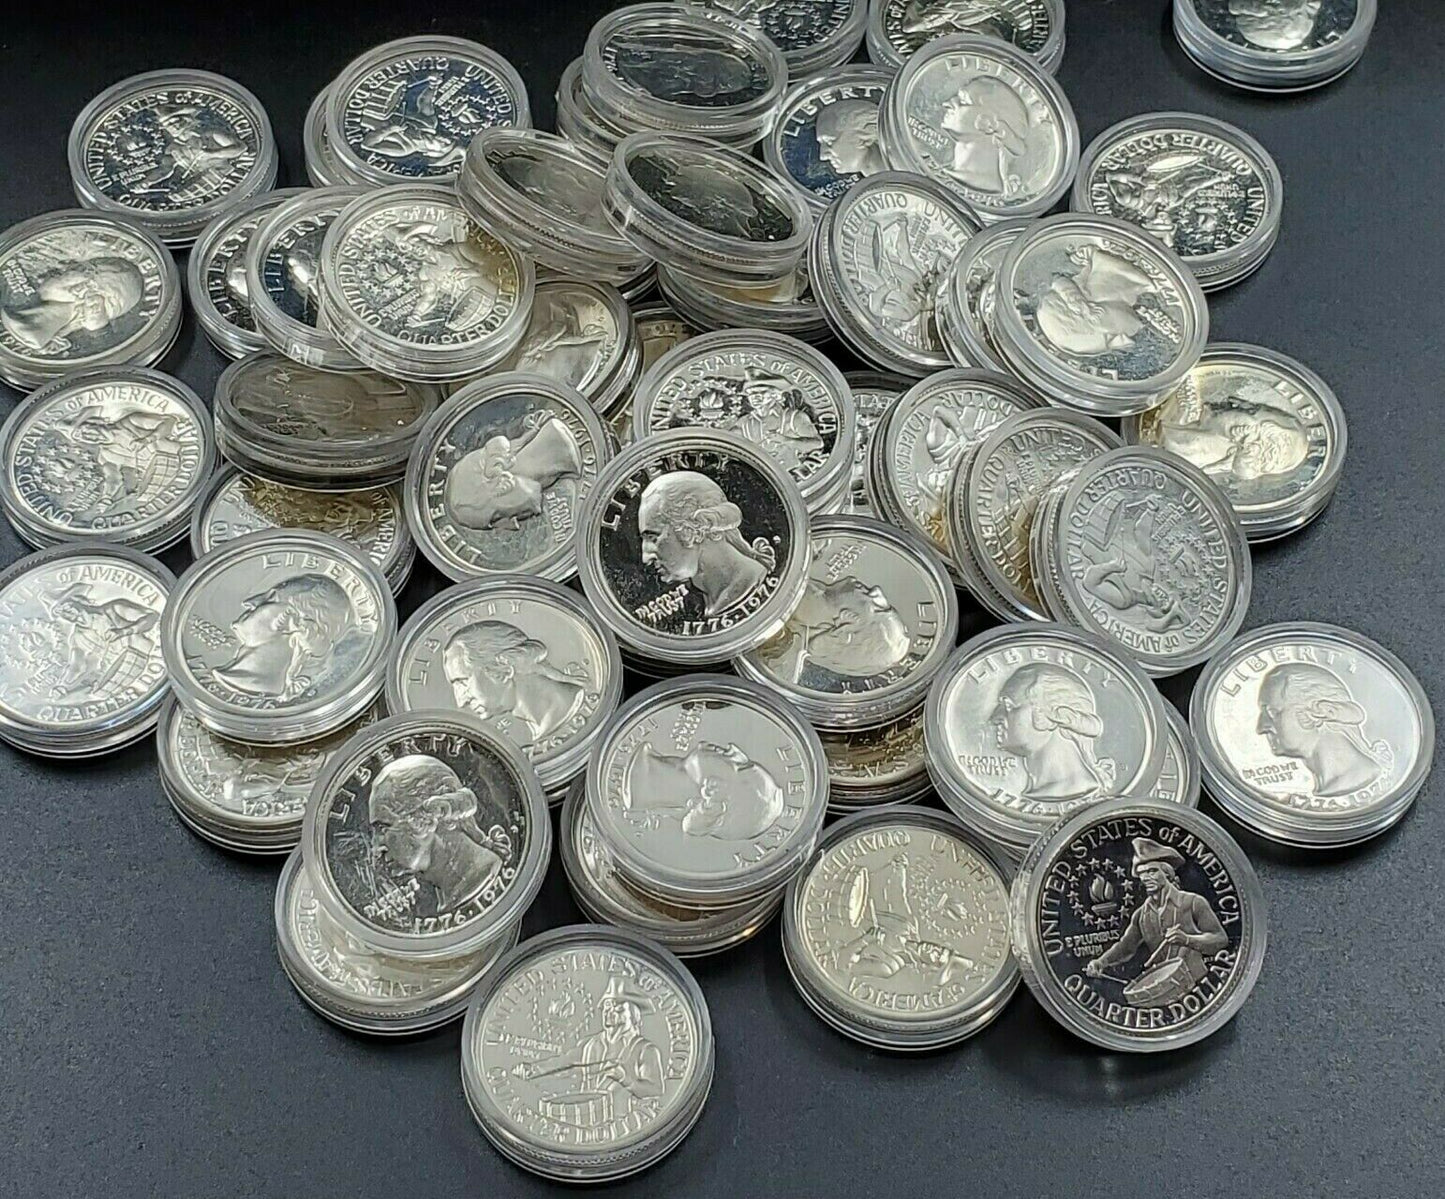 1976 S Proof Washington Silver Quarter Bicentennial in Capsule - 1 Coin per Buy